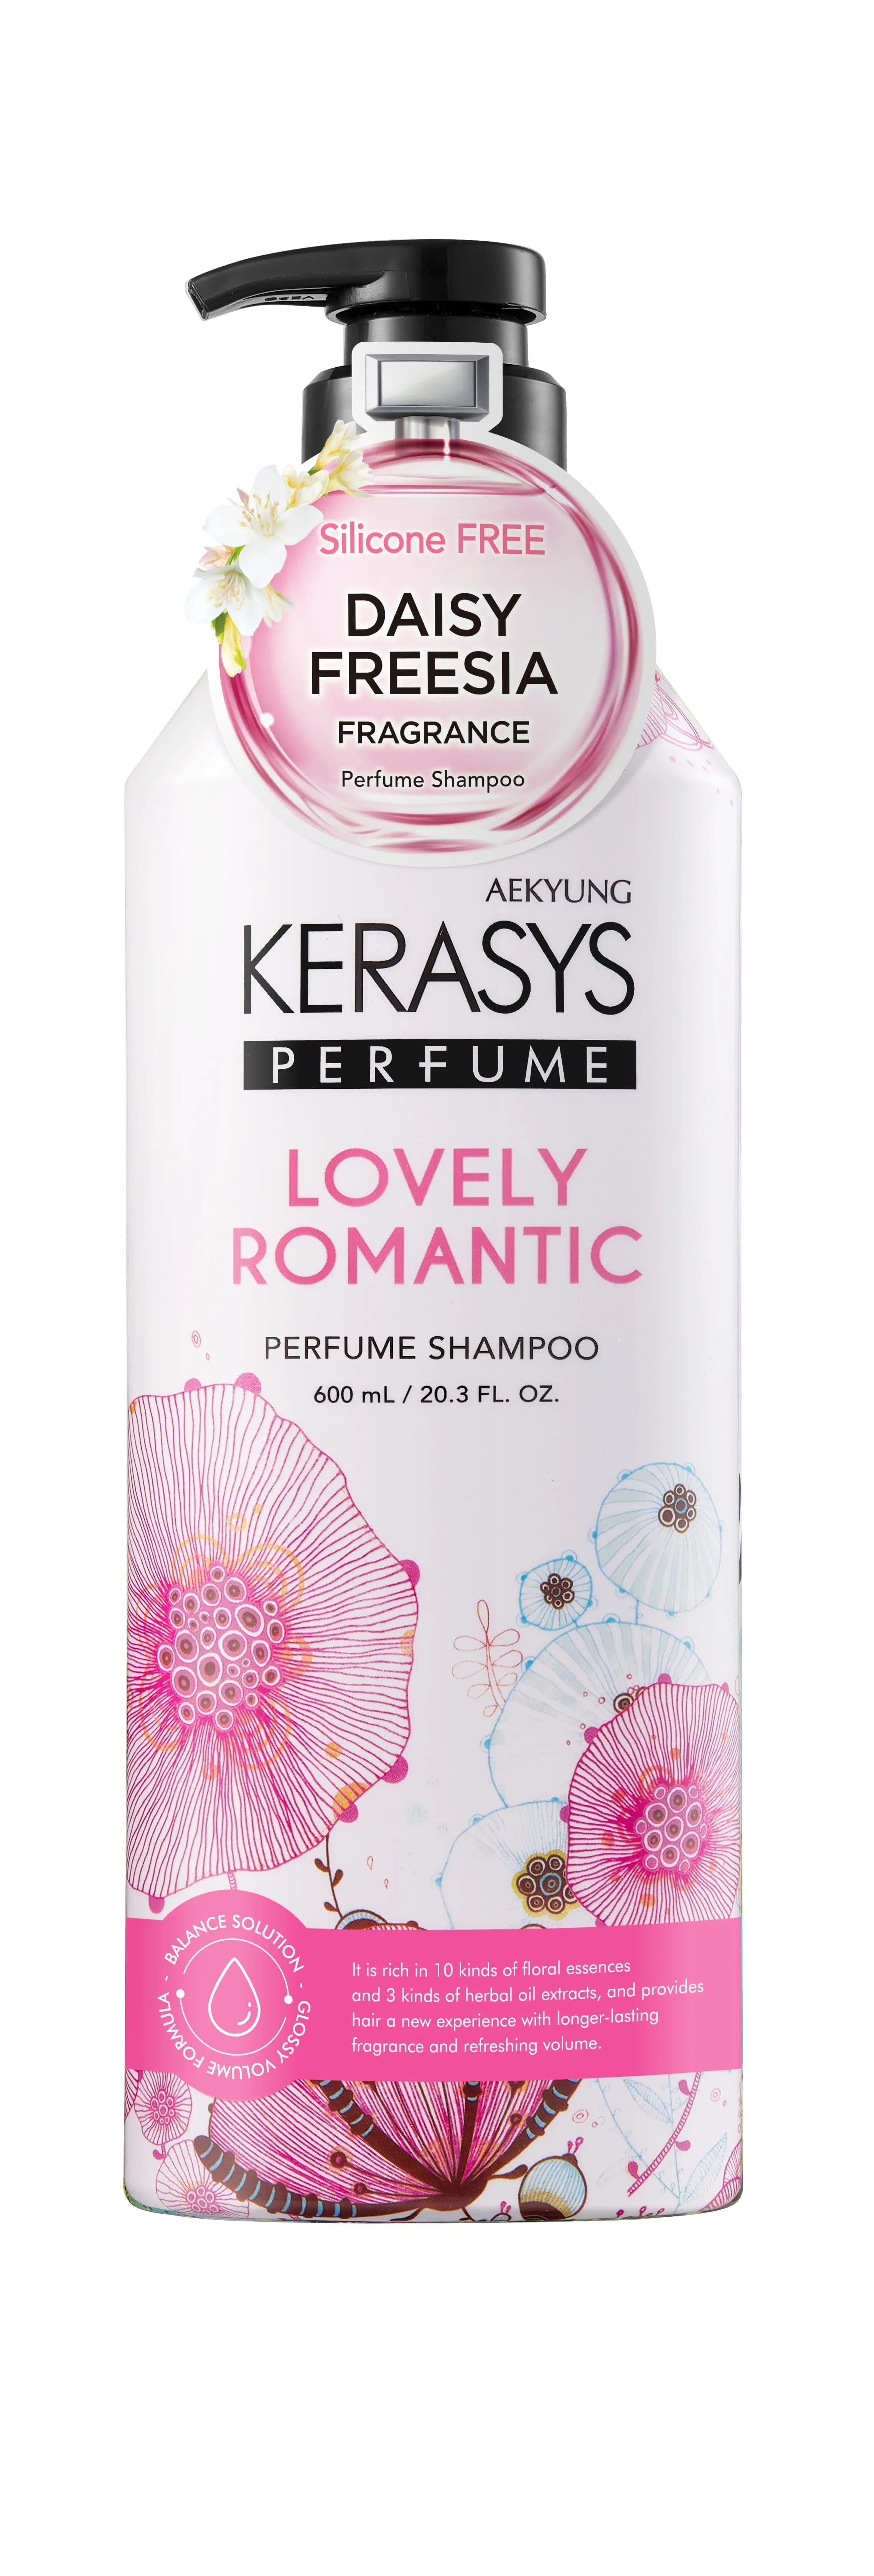 Aekyung Kerasys Parfumed Lovely & Romantic Шампунь для волос парфюмированный Романтик 600 мл